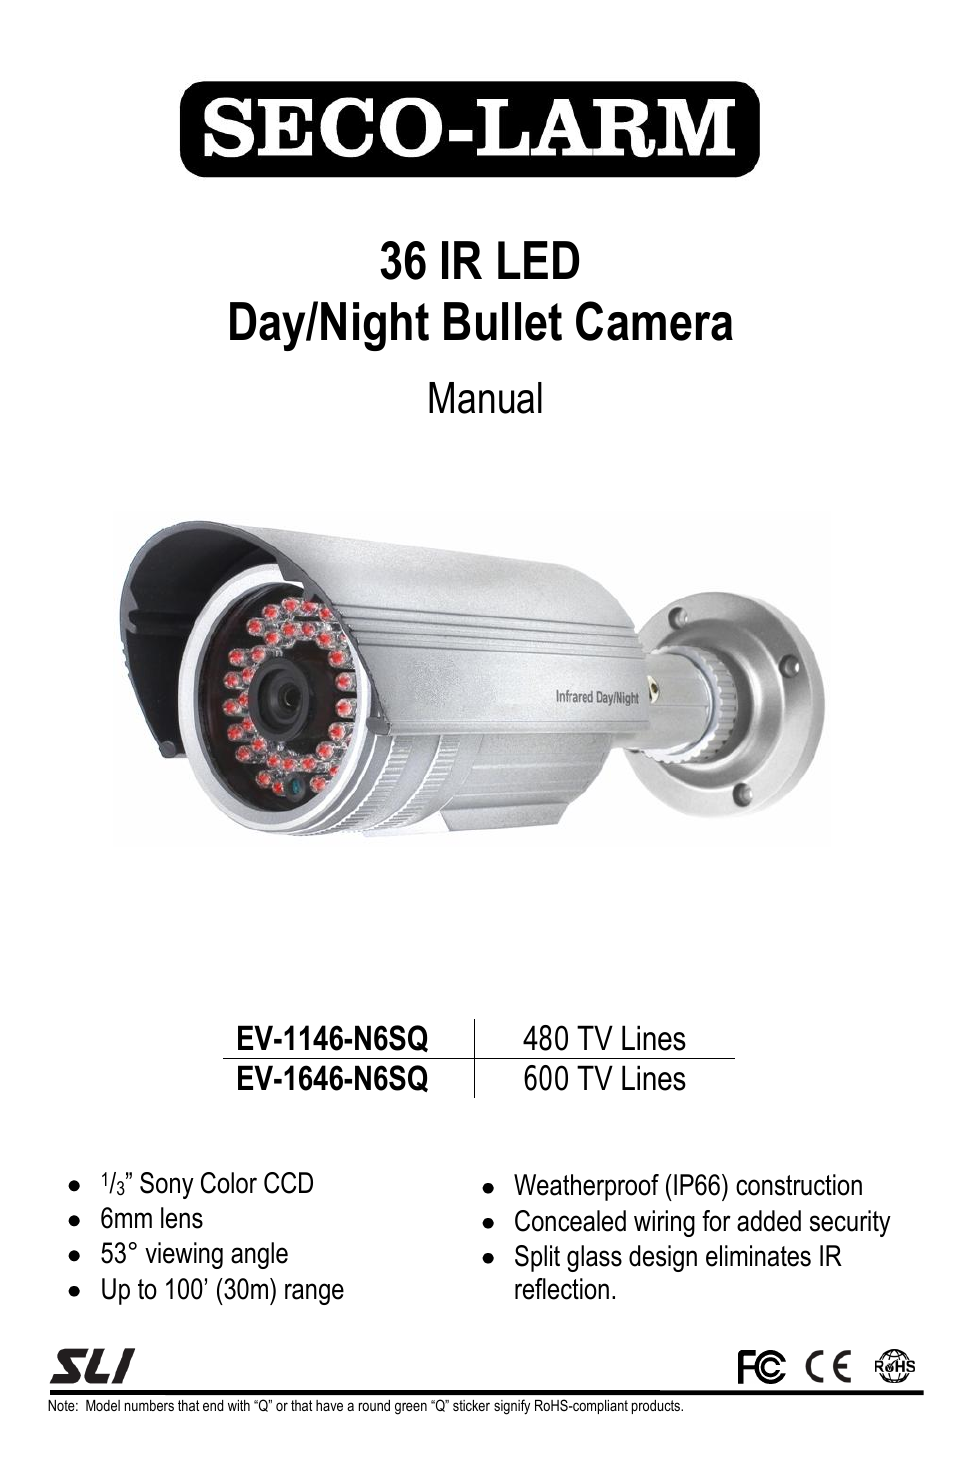 IR LED Day/Night Bullet Camera EV-1646-N6SQ